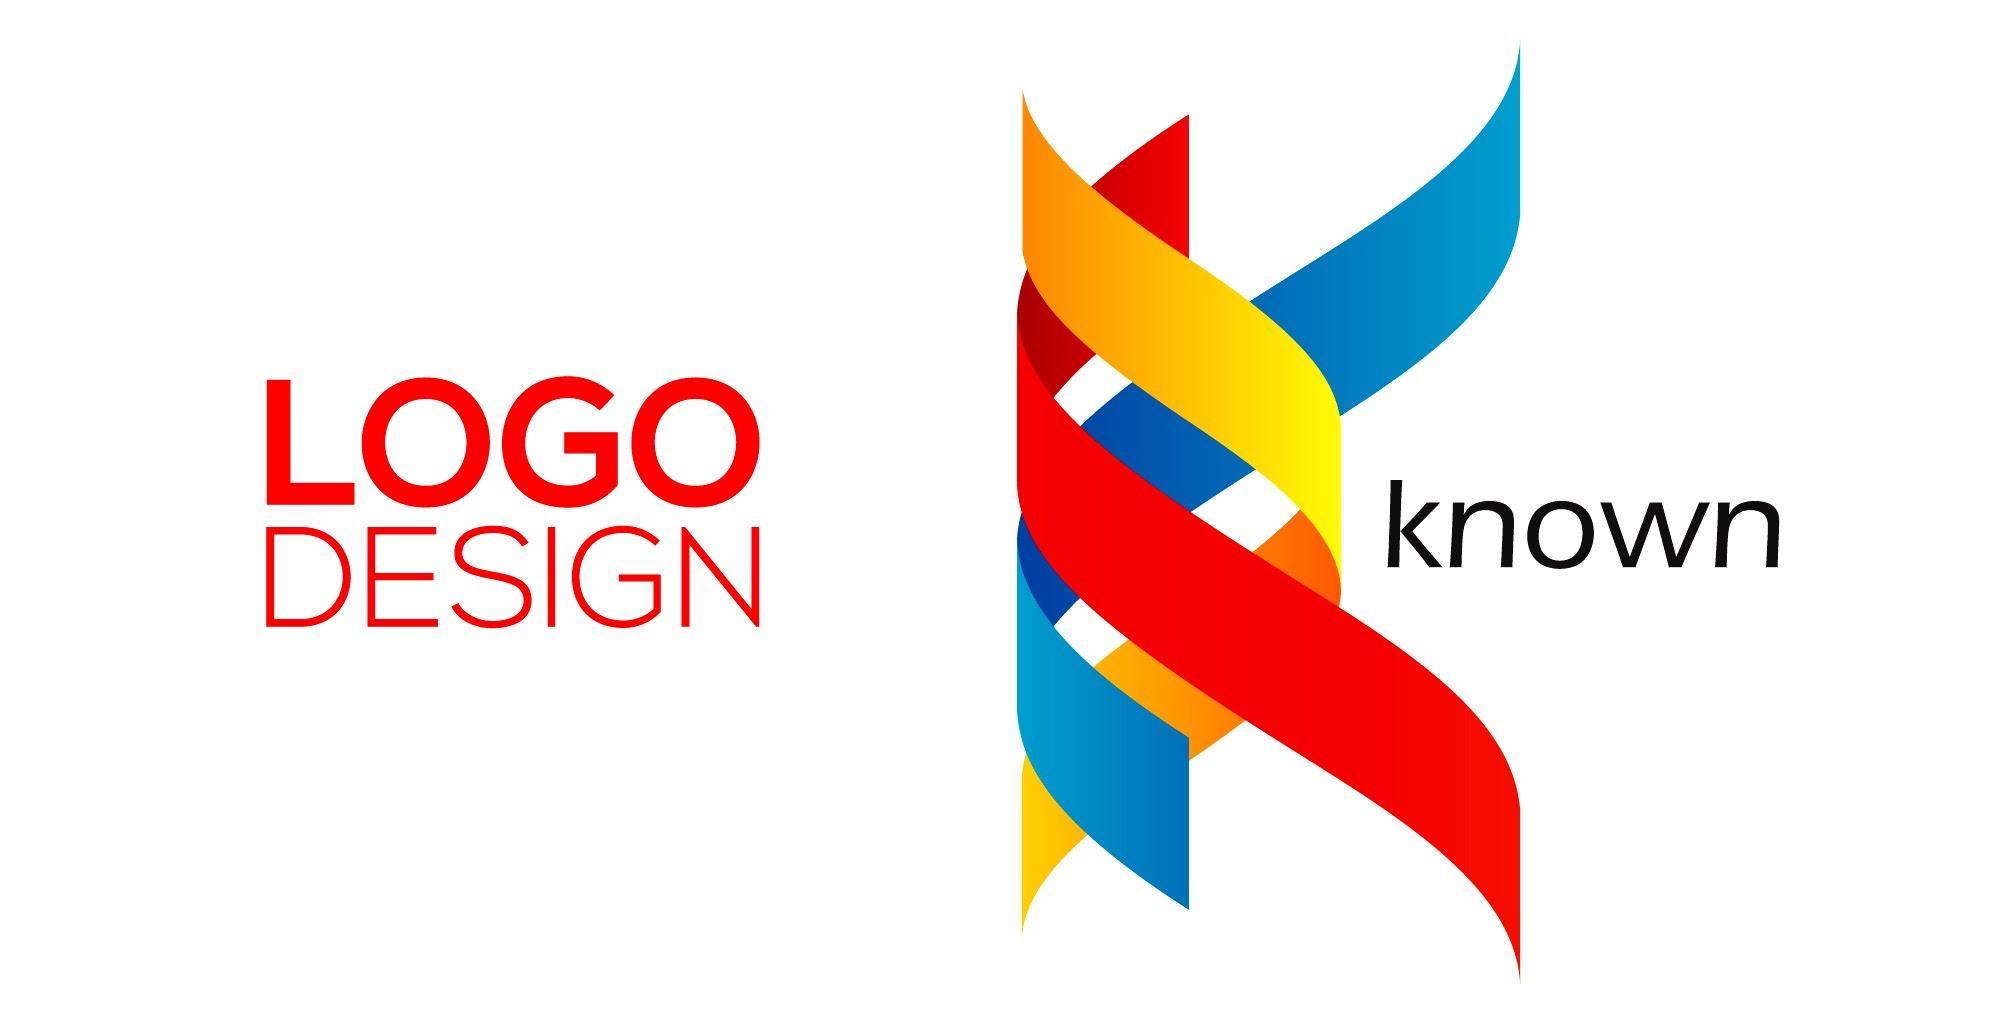 Google Design Logo - Logo Design. Jumia Production Services